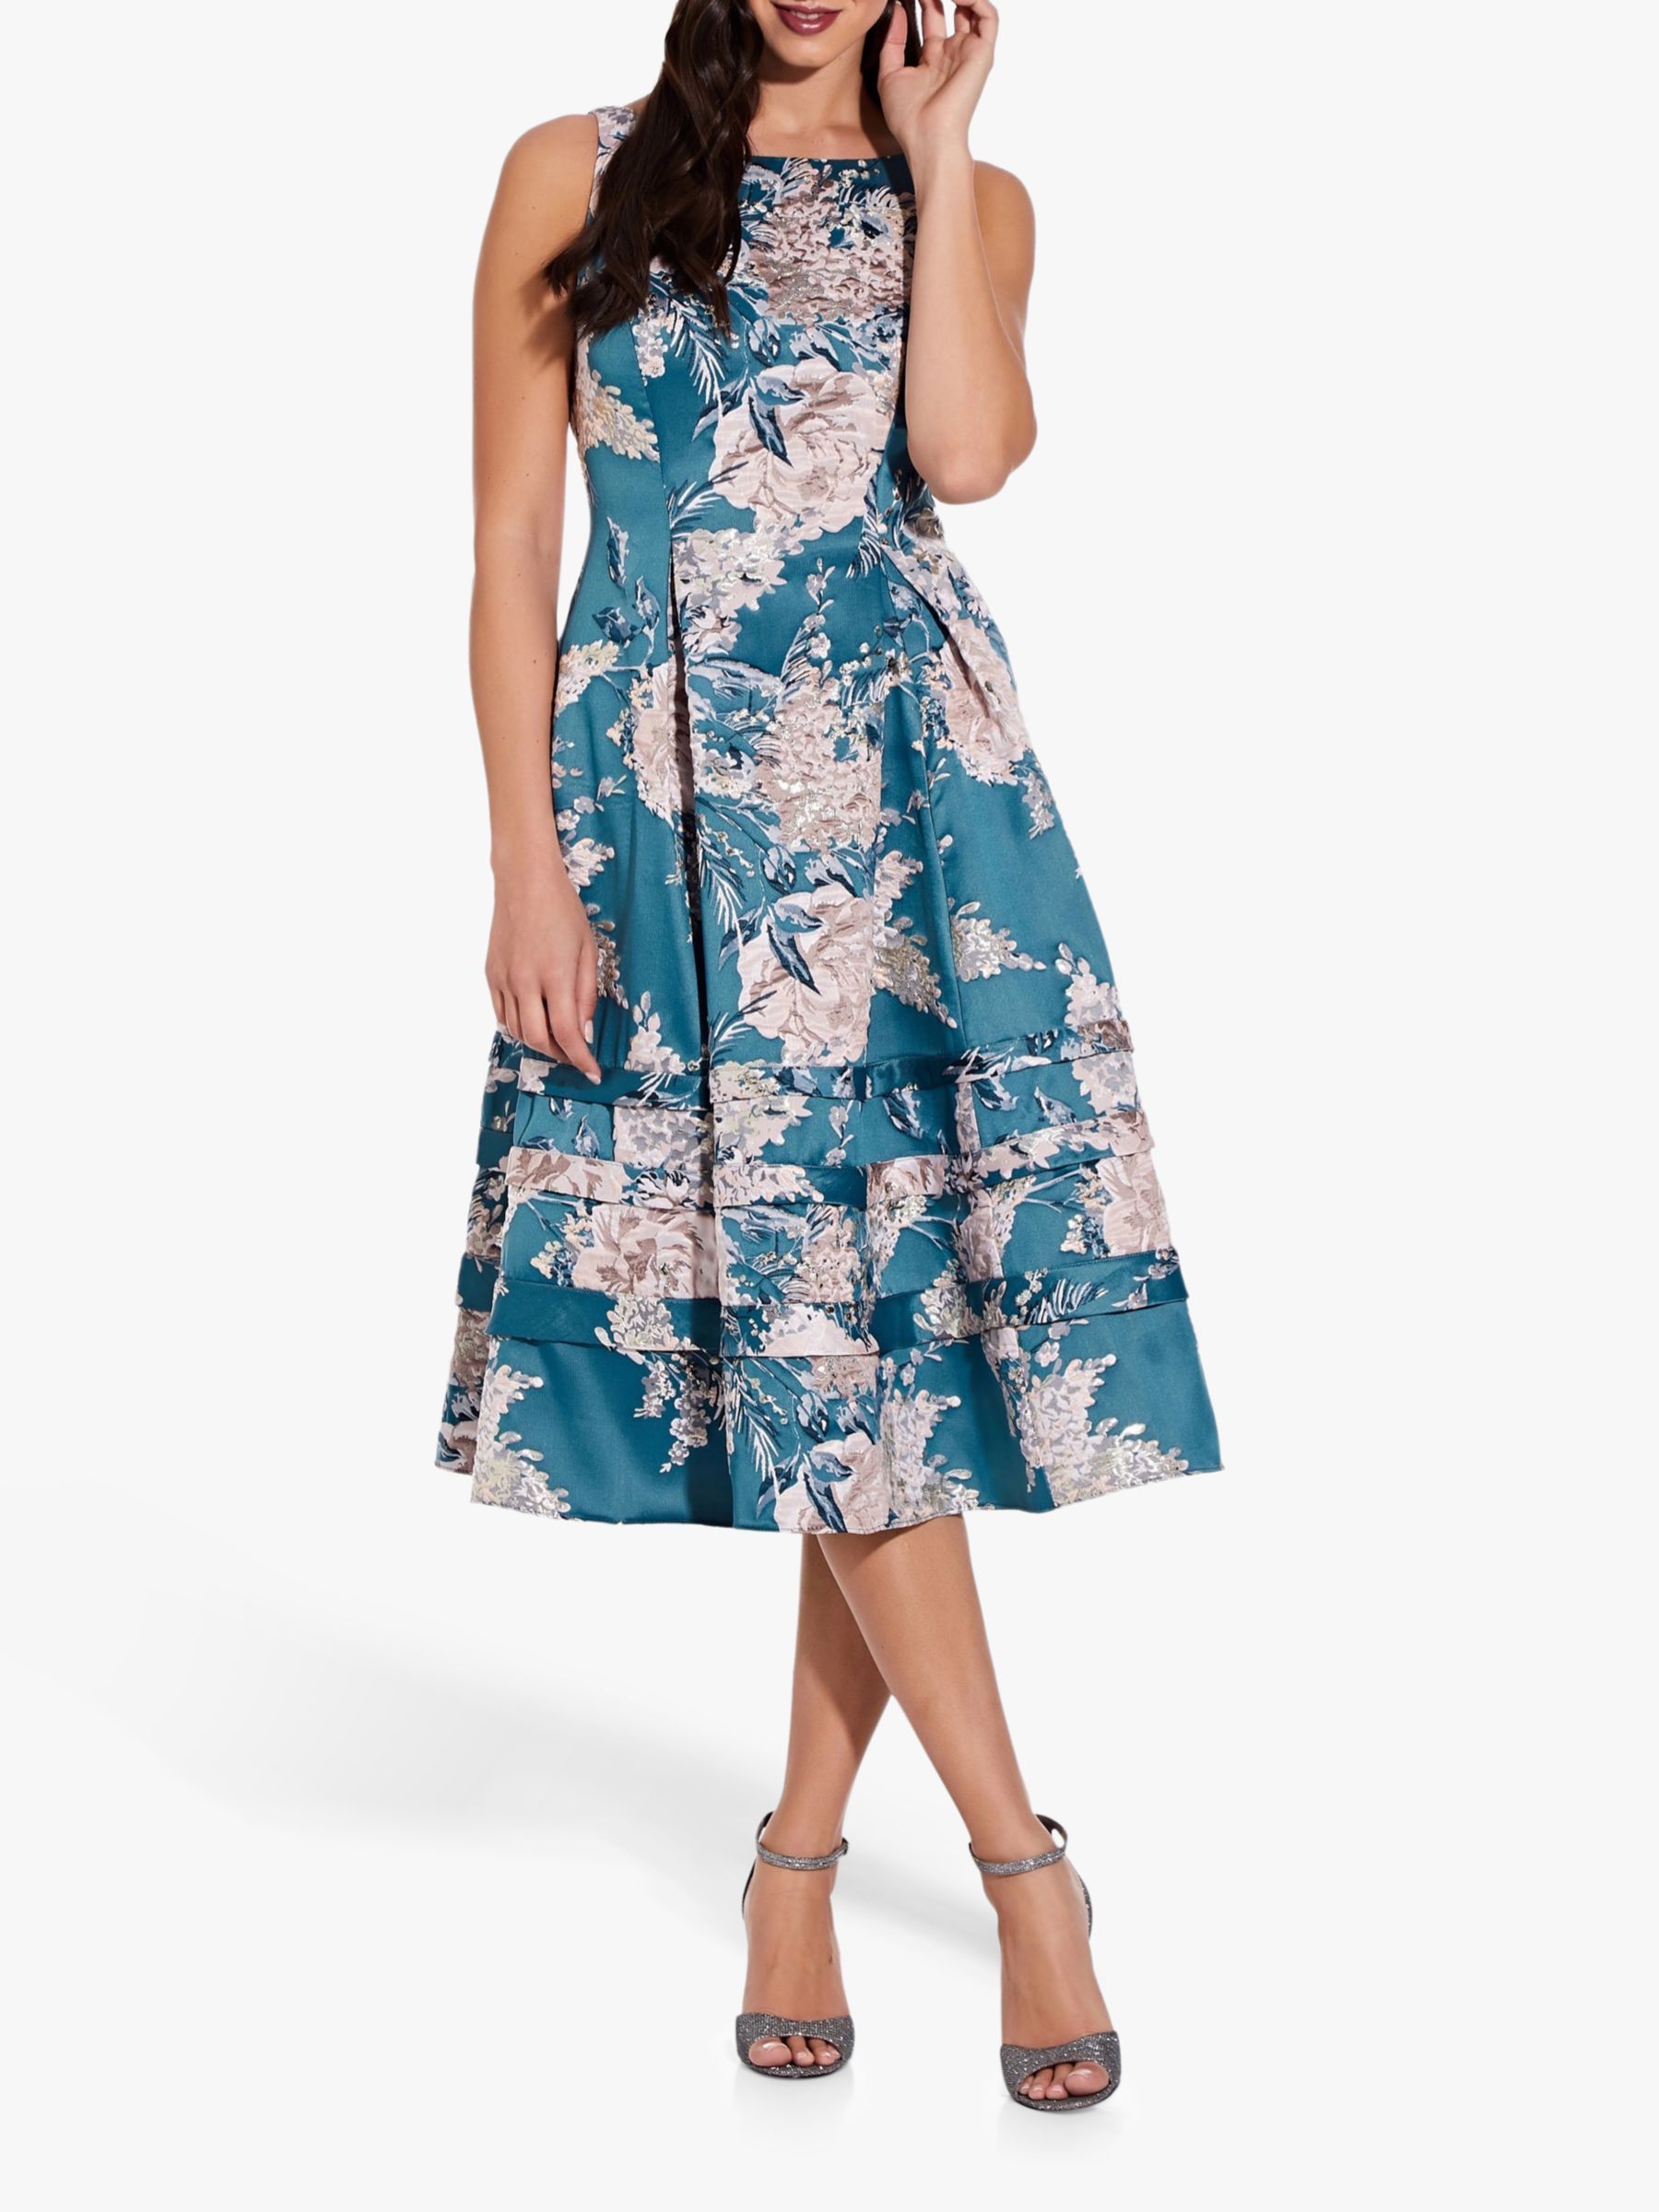 Adrianna Papell Jacquard Floral Print Flared Midi Dress, Teal/Multi